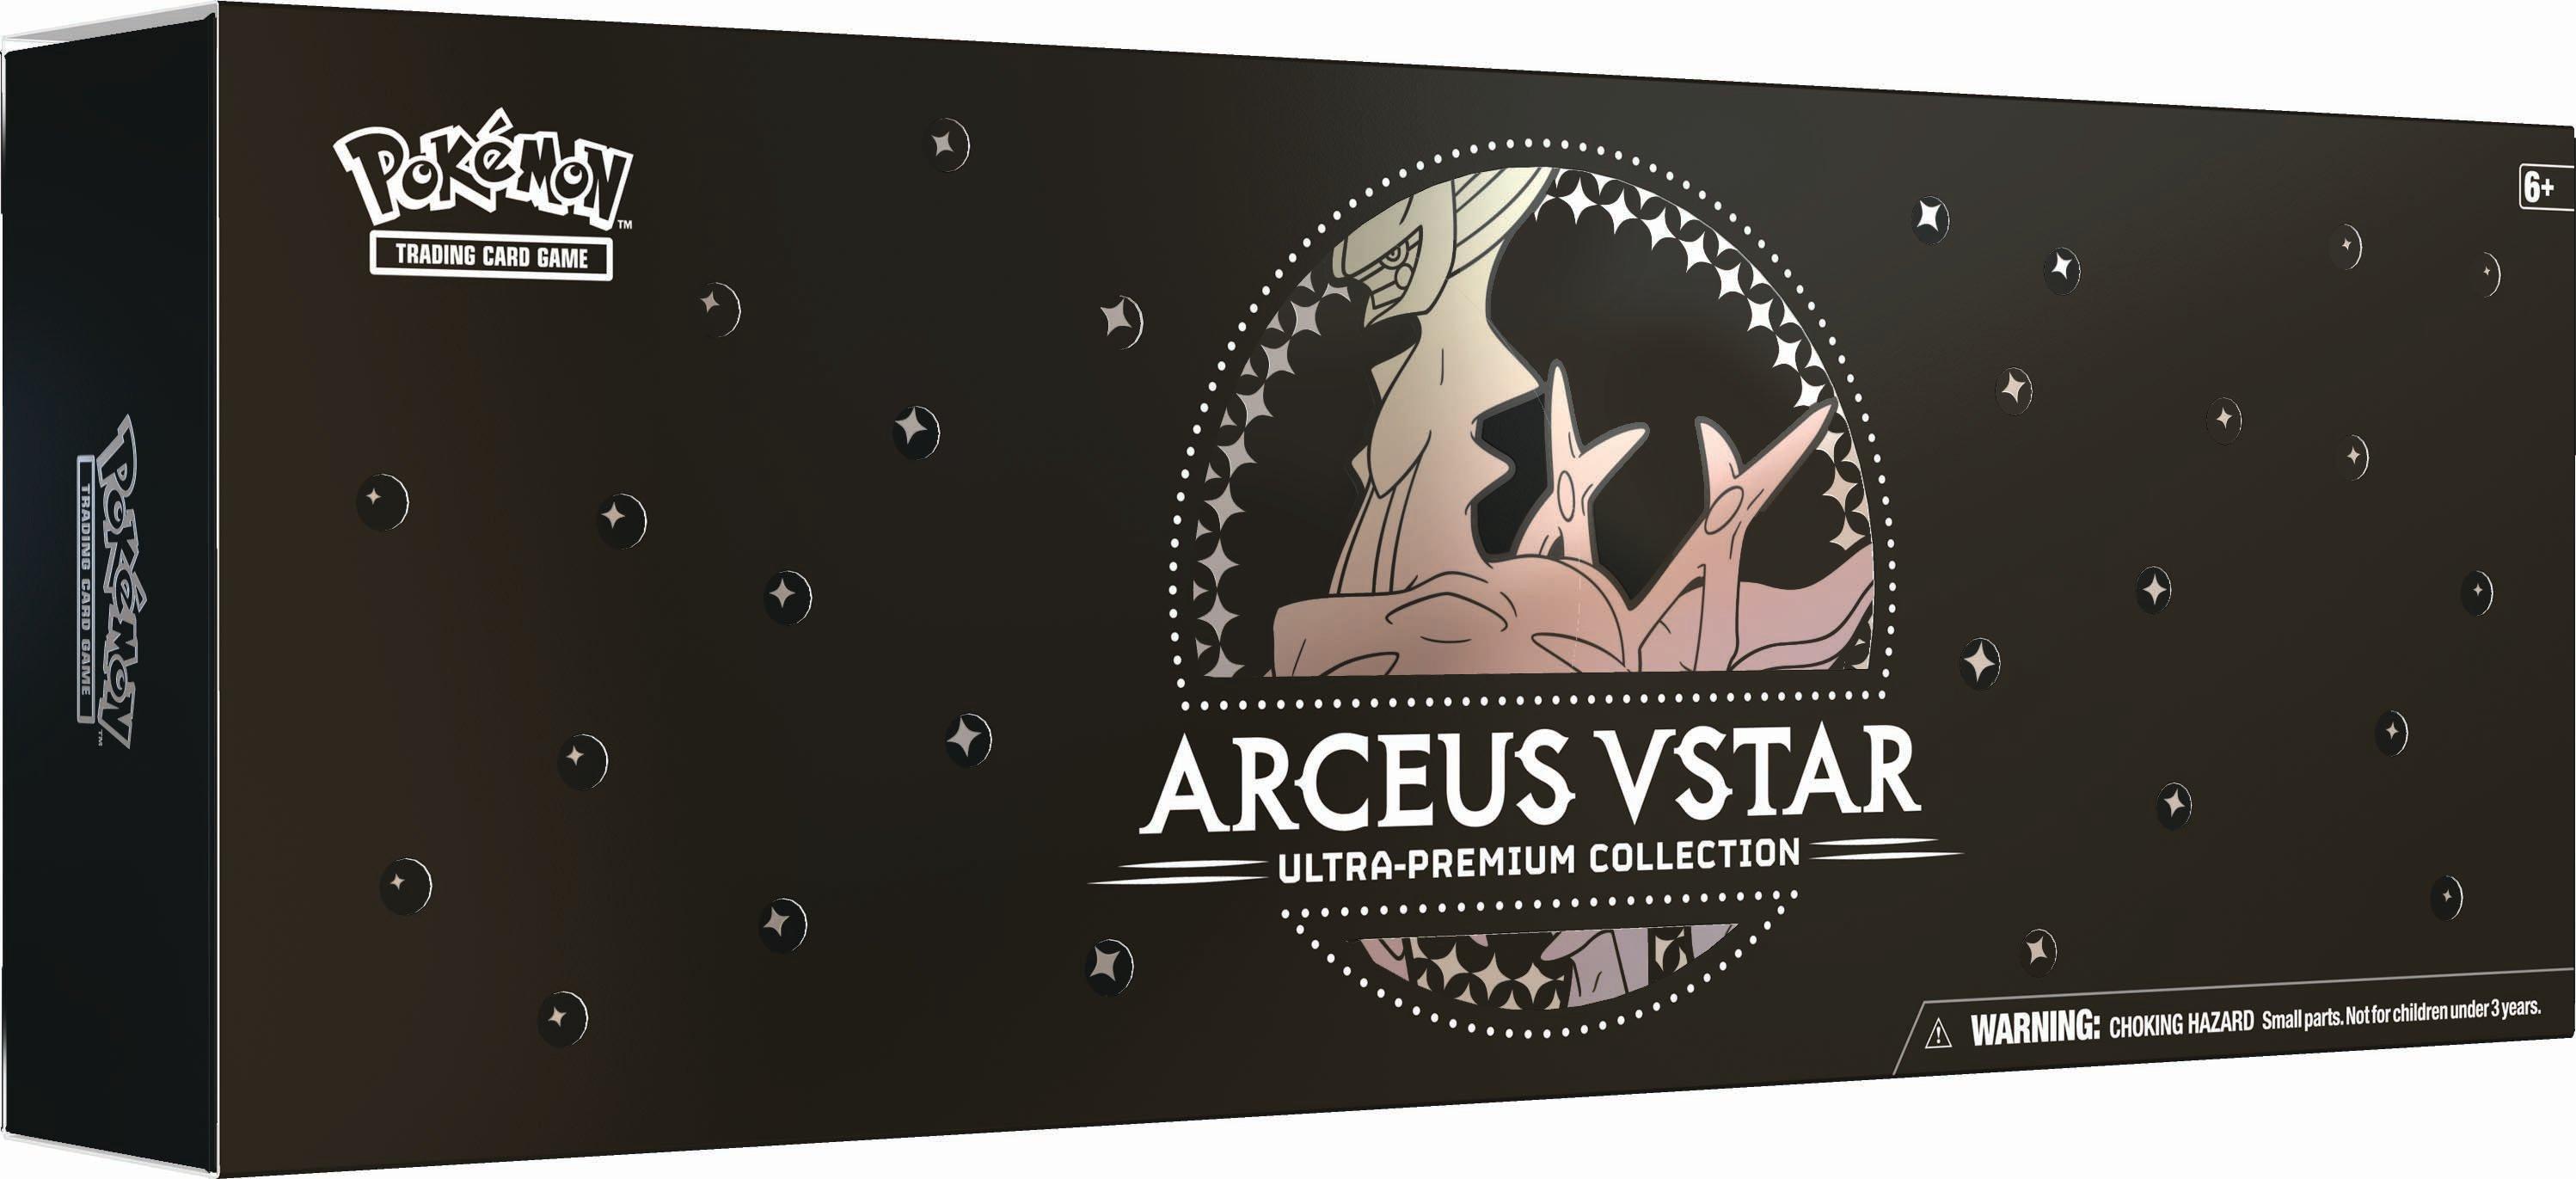 Pokemon (4) Sealed Packs Platinum: Arceus Complete Art Set